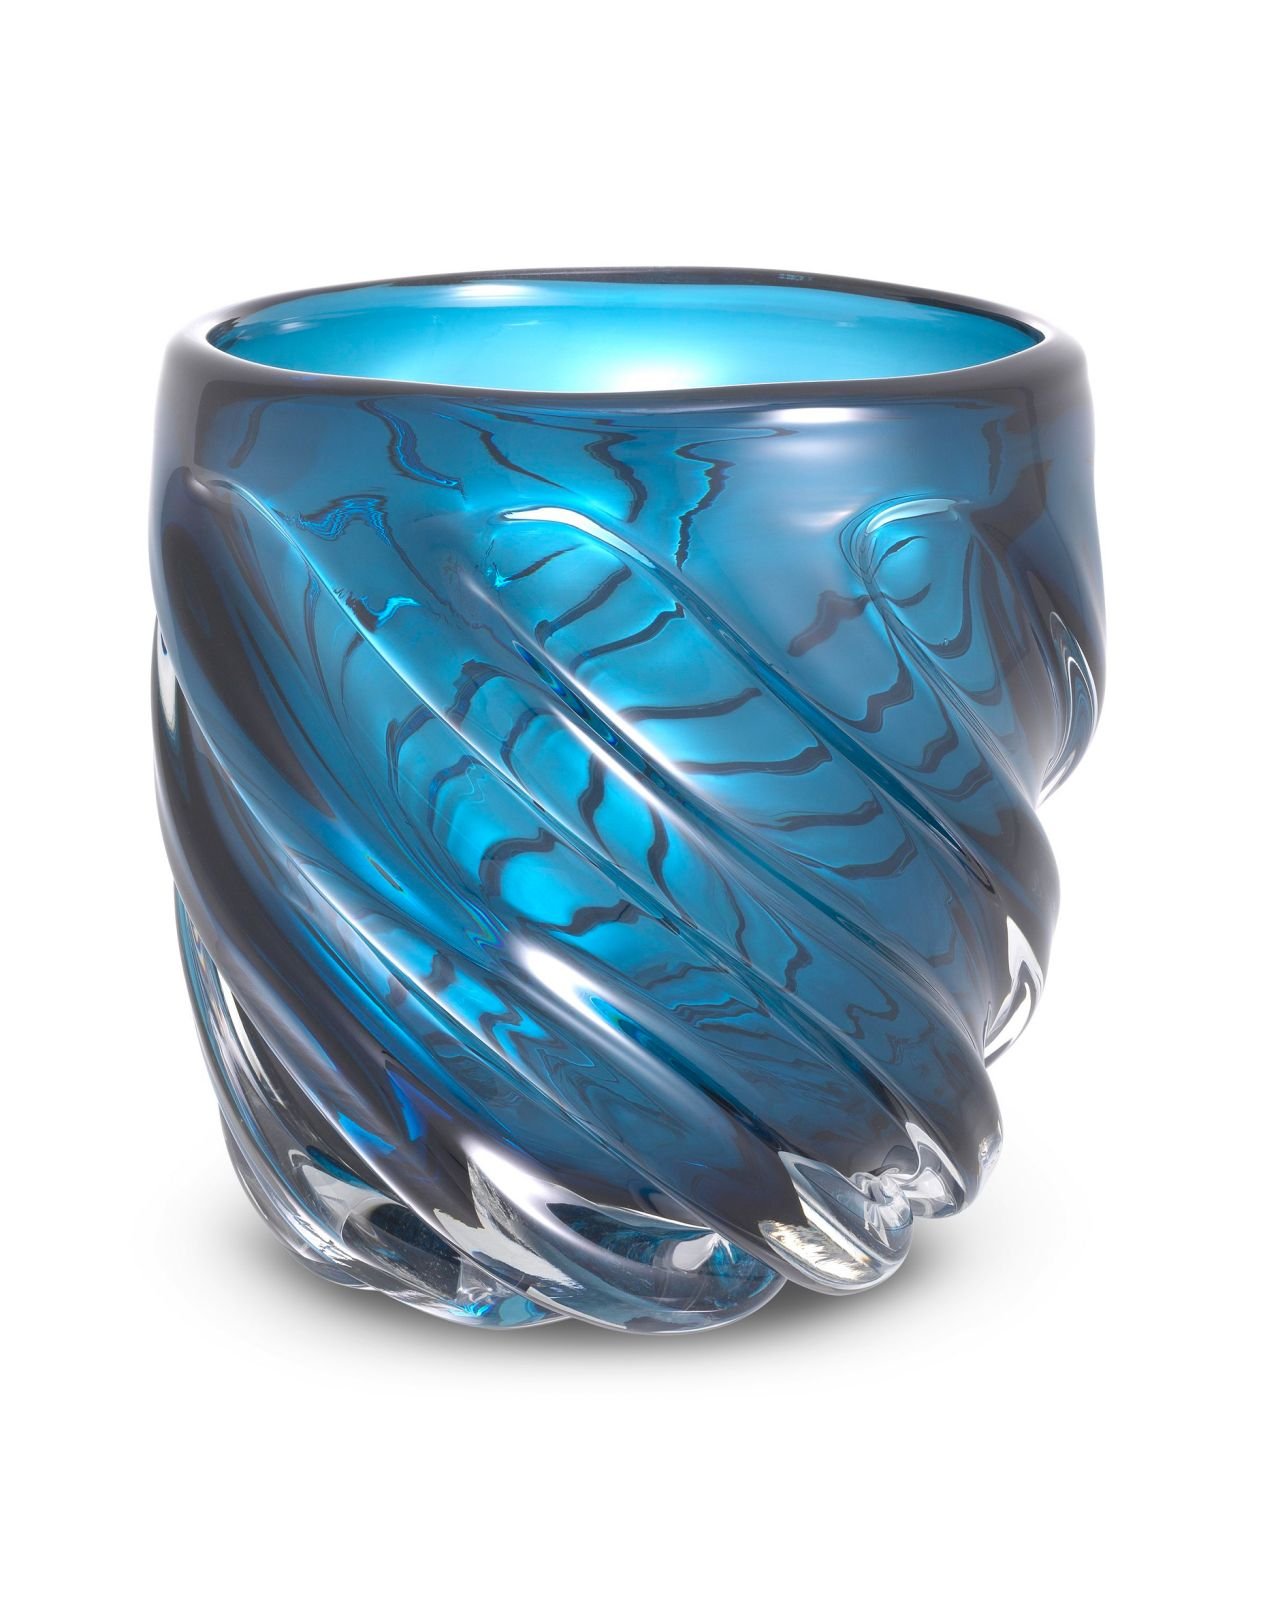 Angelito vase blau